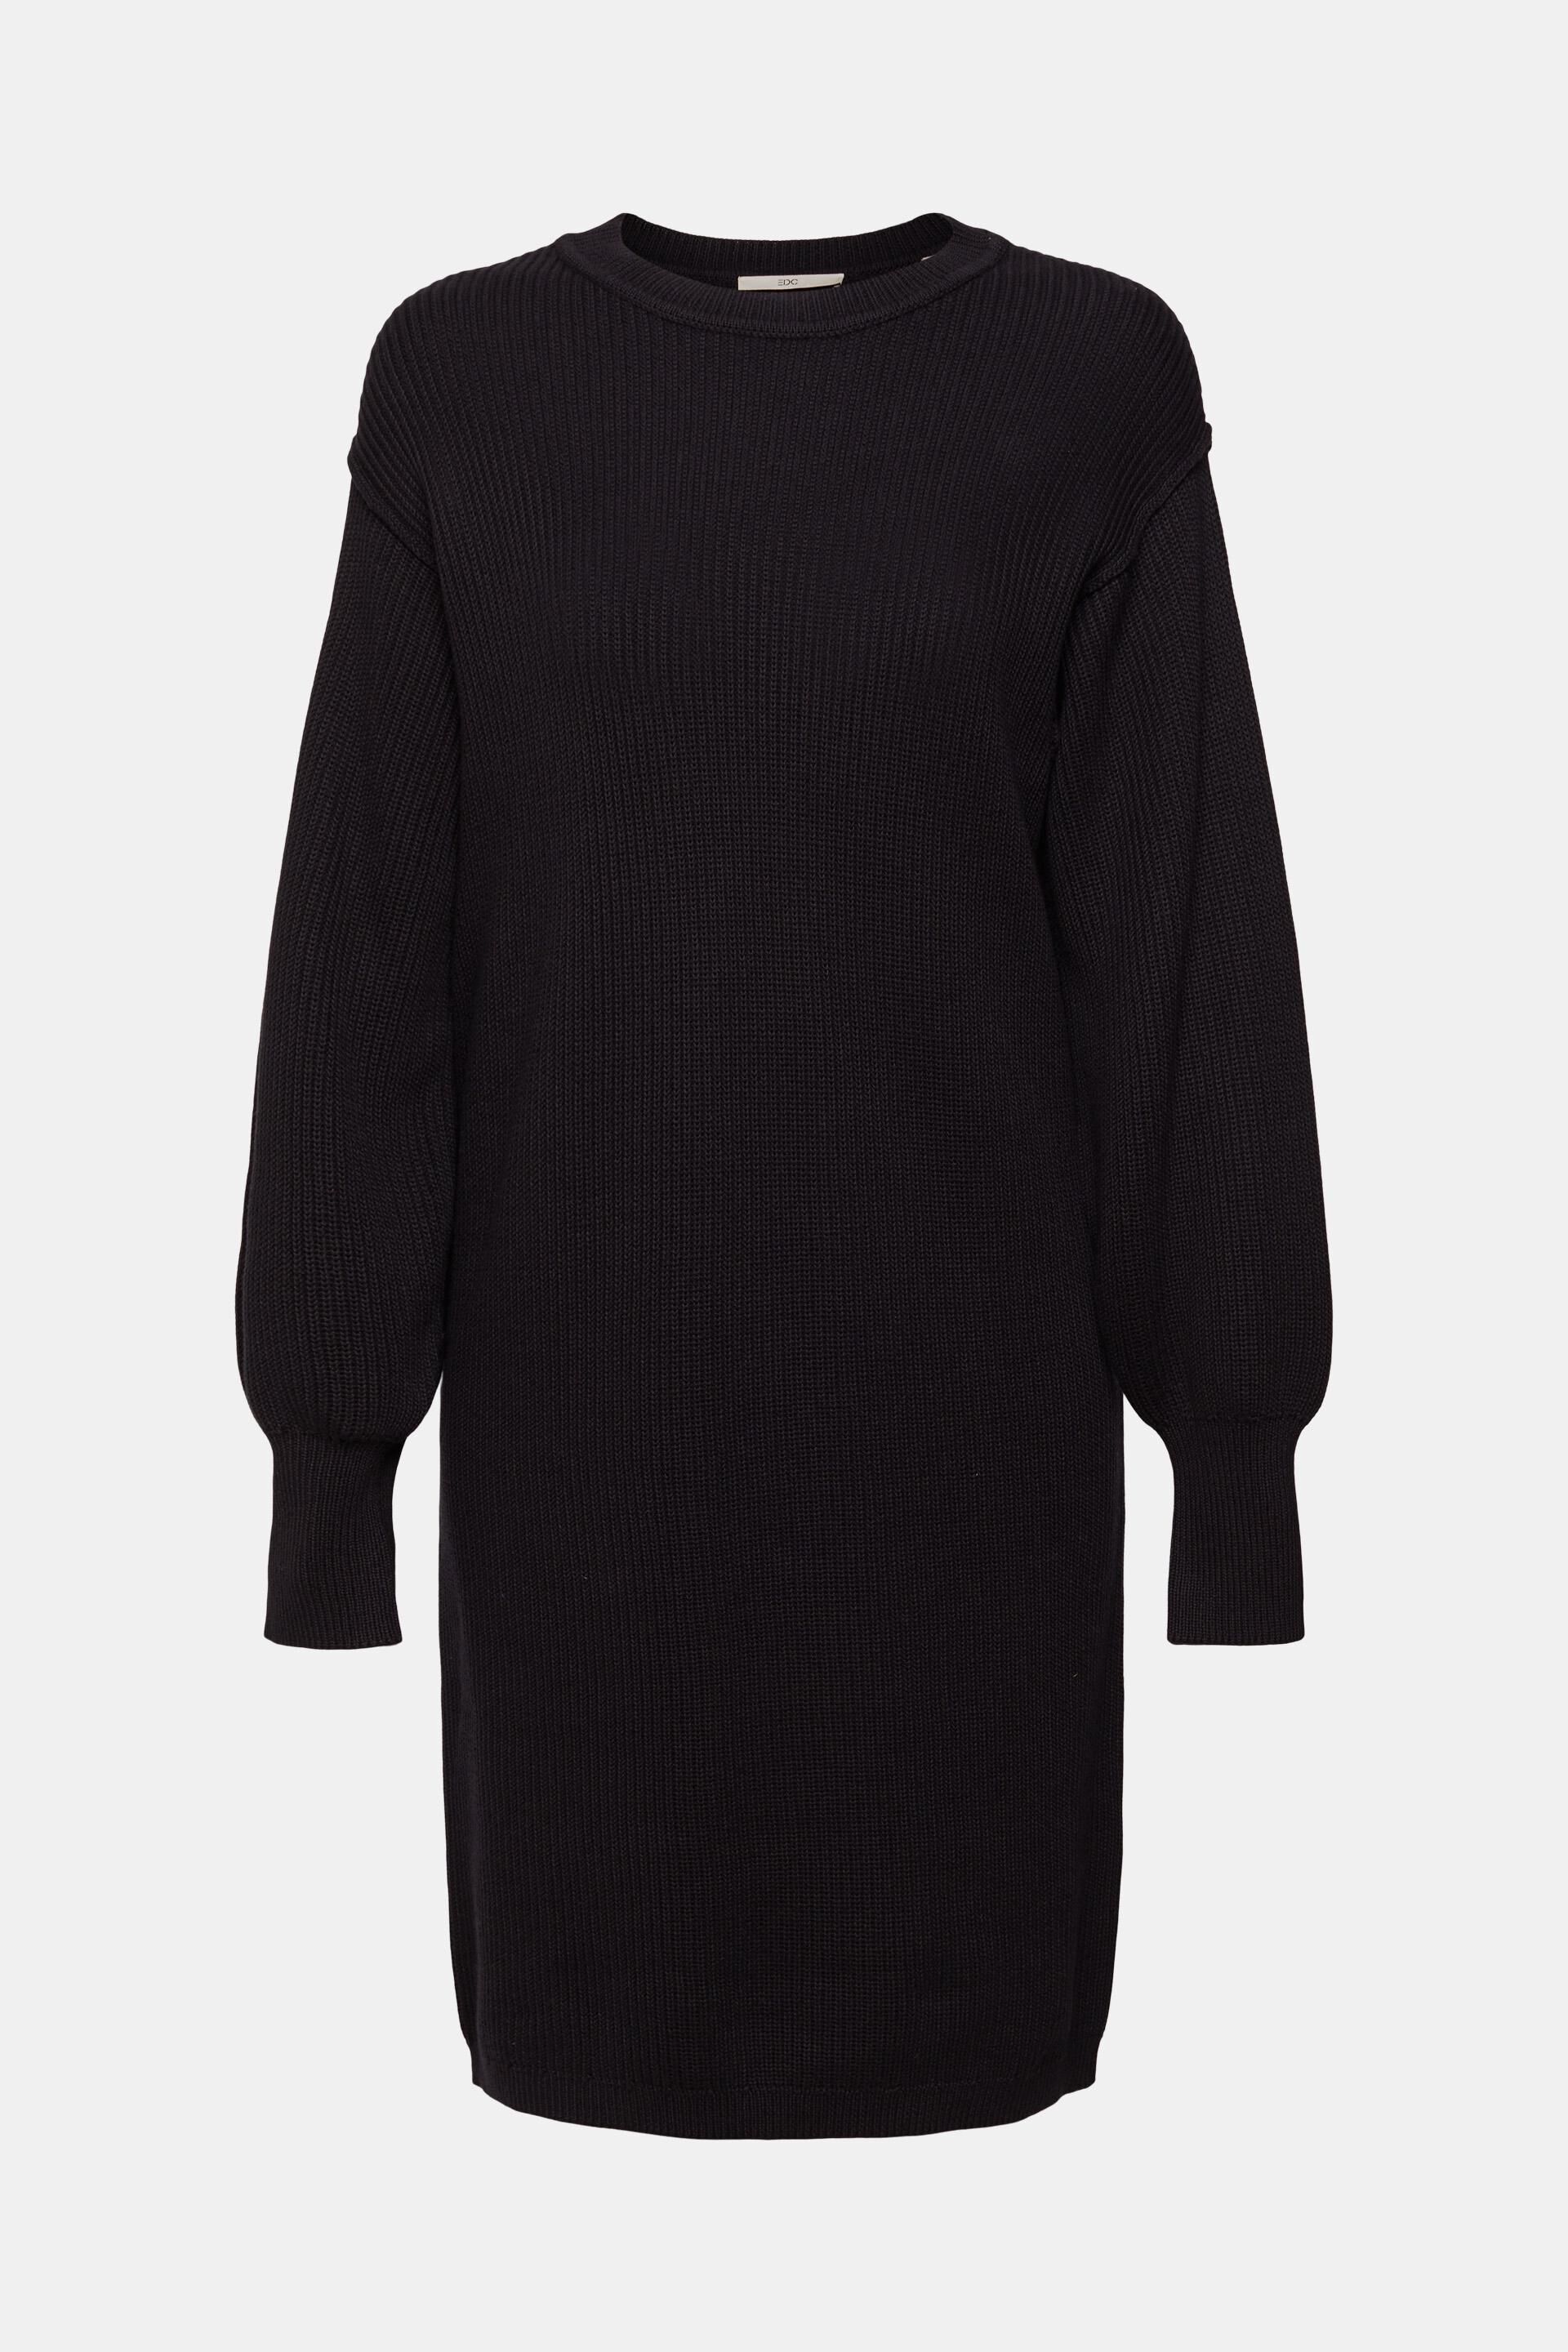 Mode Jurken Wollen jurken Mangano Wollen jurk lichtgrijs-zwart elegant 